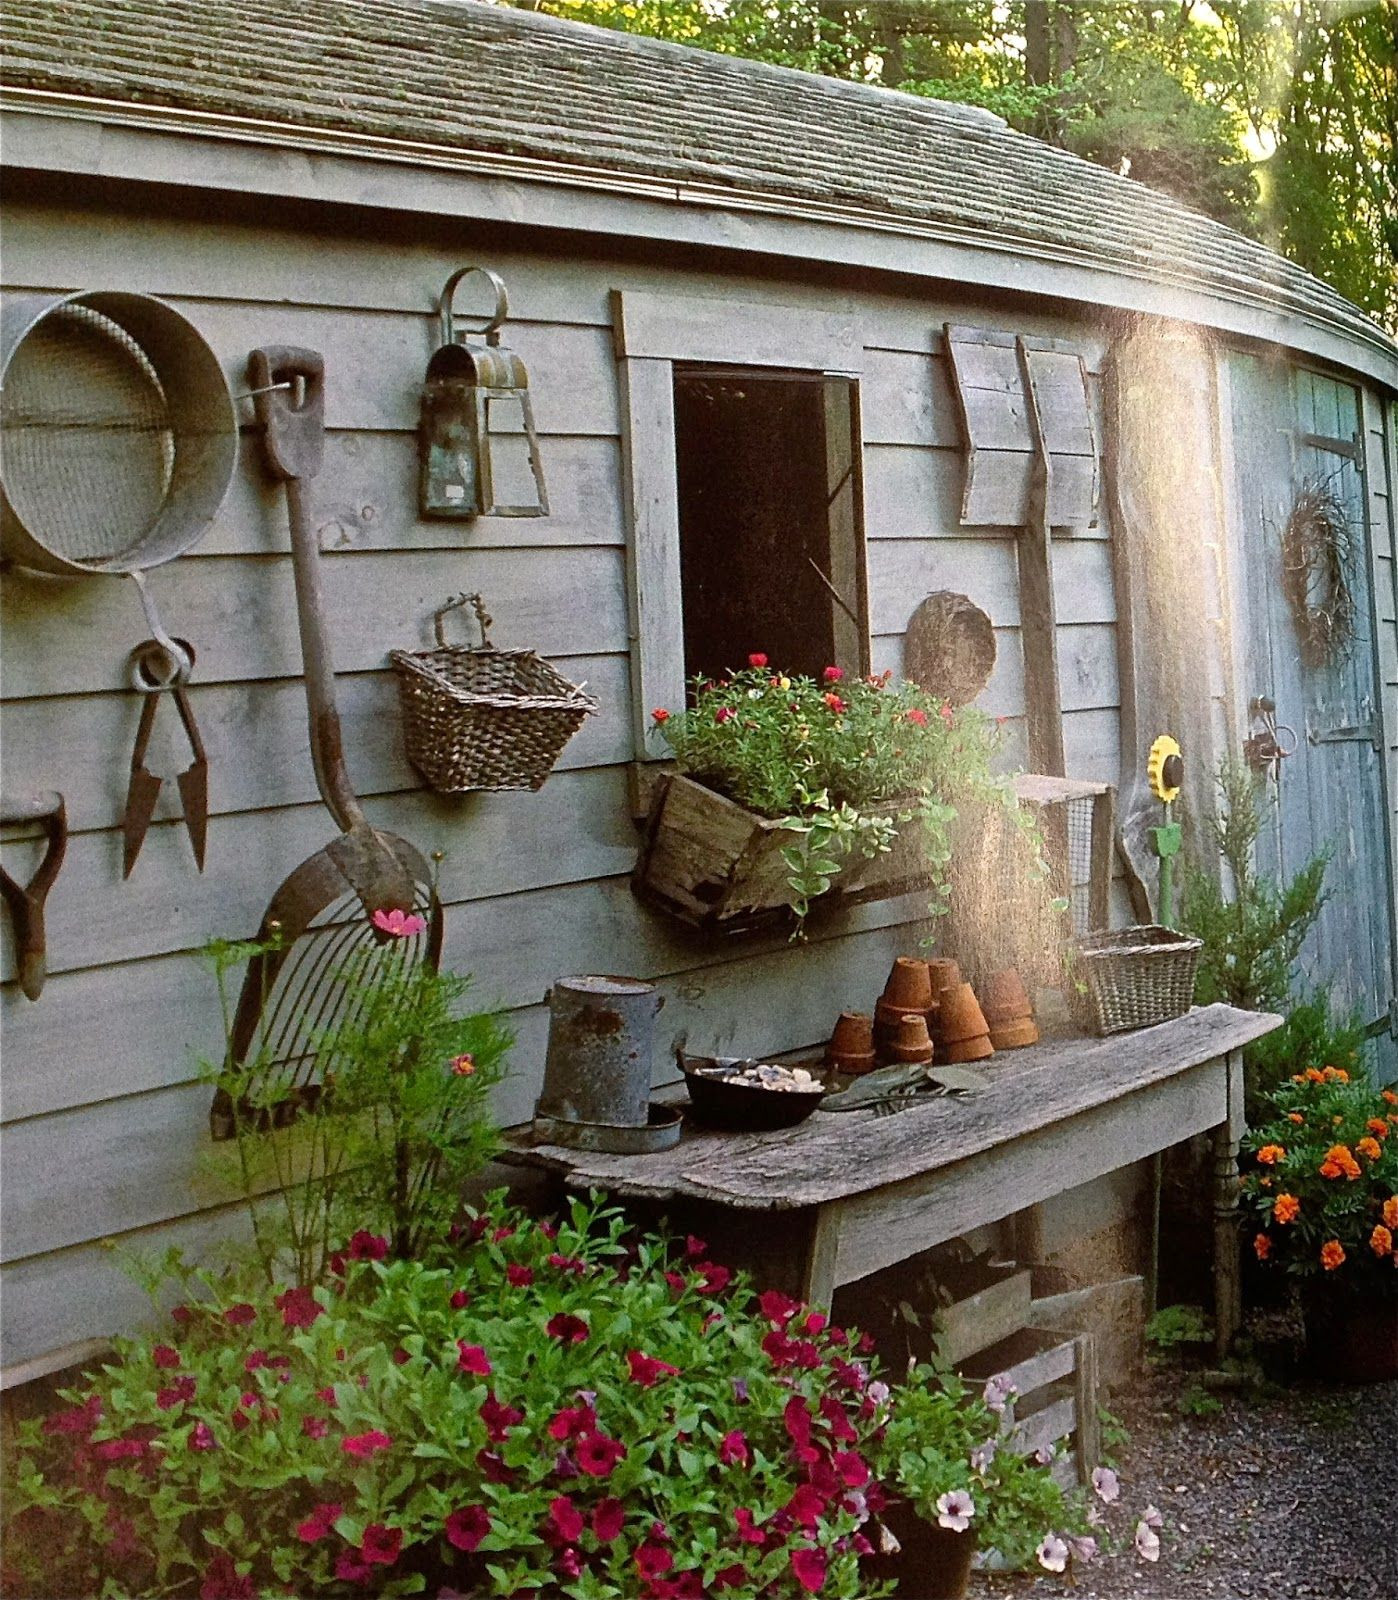 Best ideas about Rustic Garden Ideas
. Save or Pin My Garden Diaries Junk Gardening Pinterest Now.